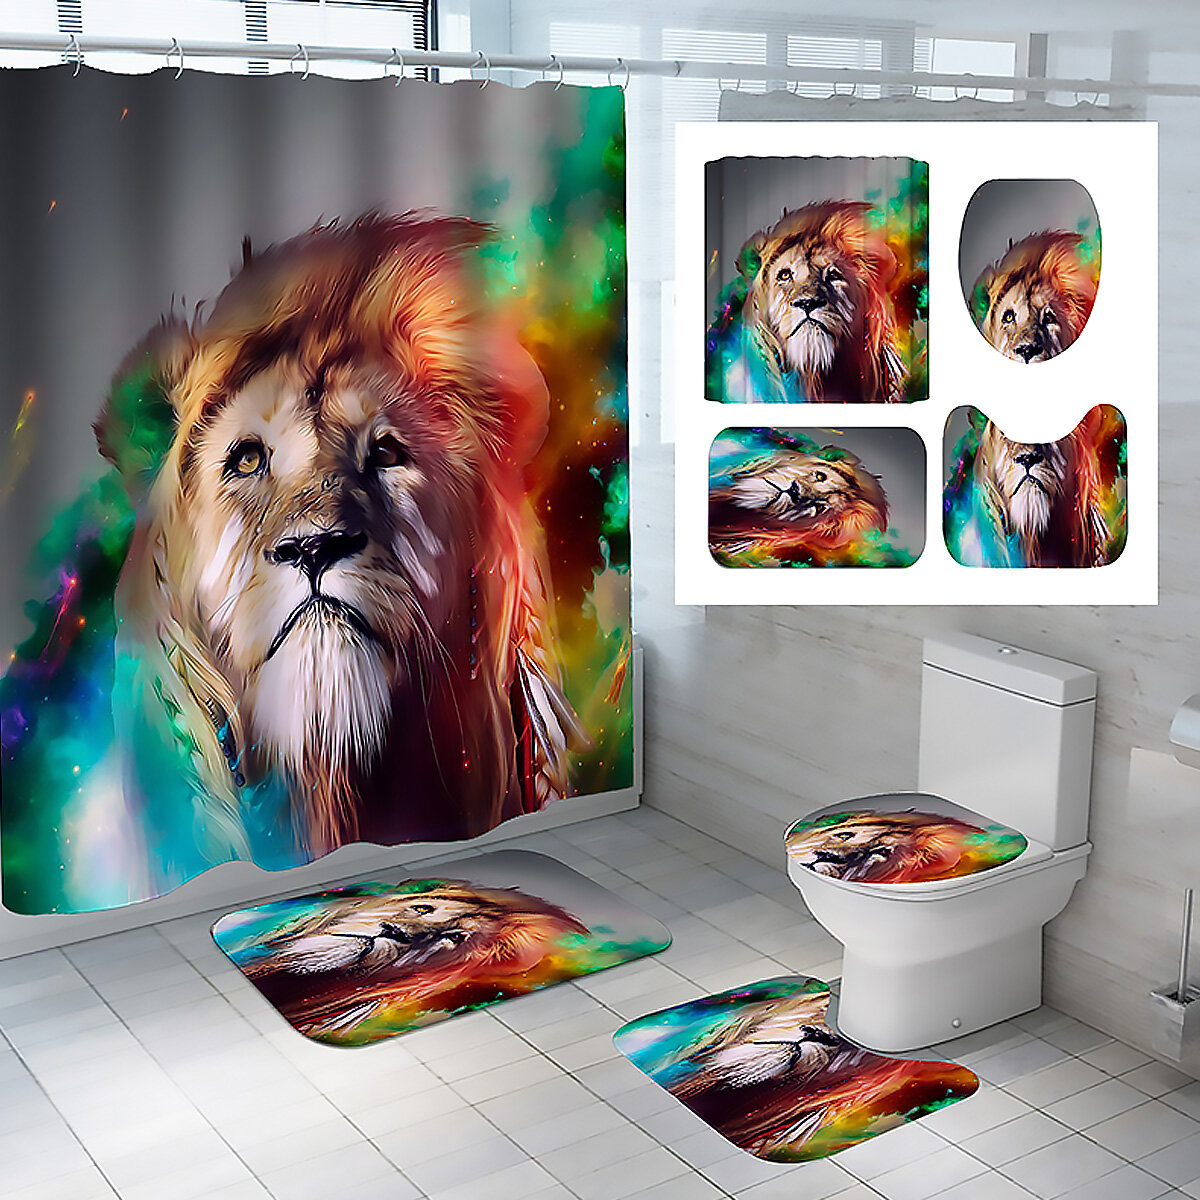 180x180CM Colorful Lion Waterproof Shower Curtain Anti-skid Bath Floor Mat Lid Cover Set